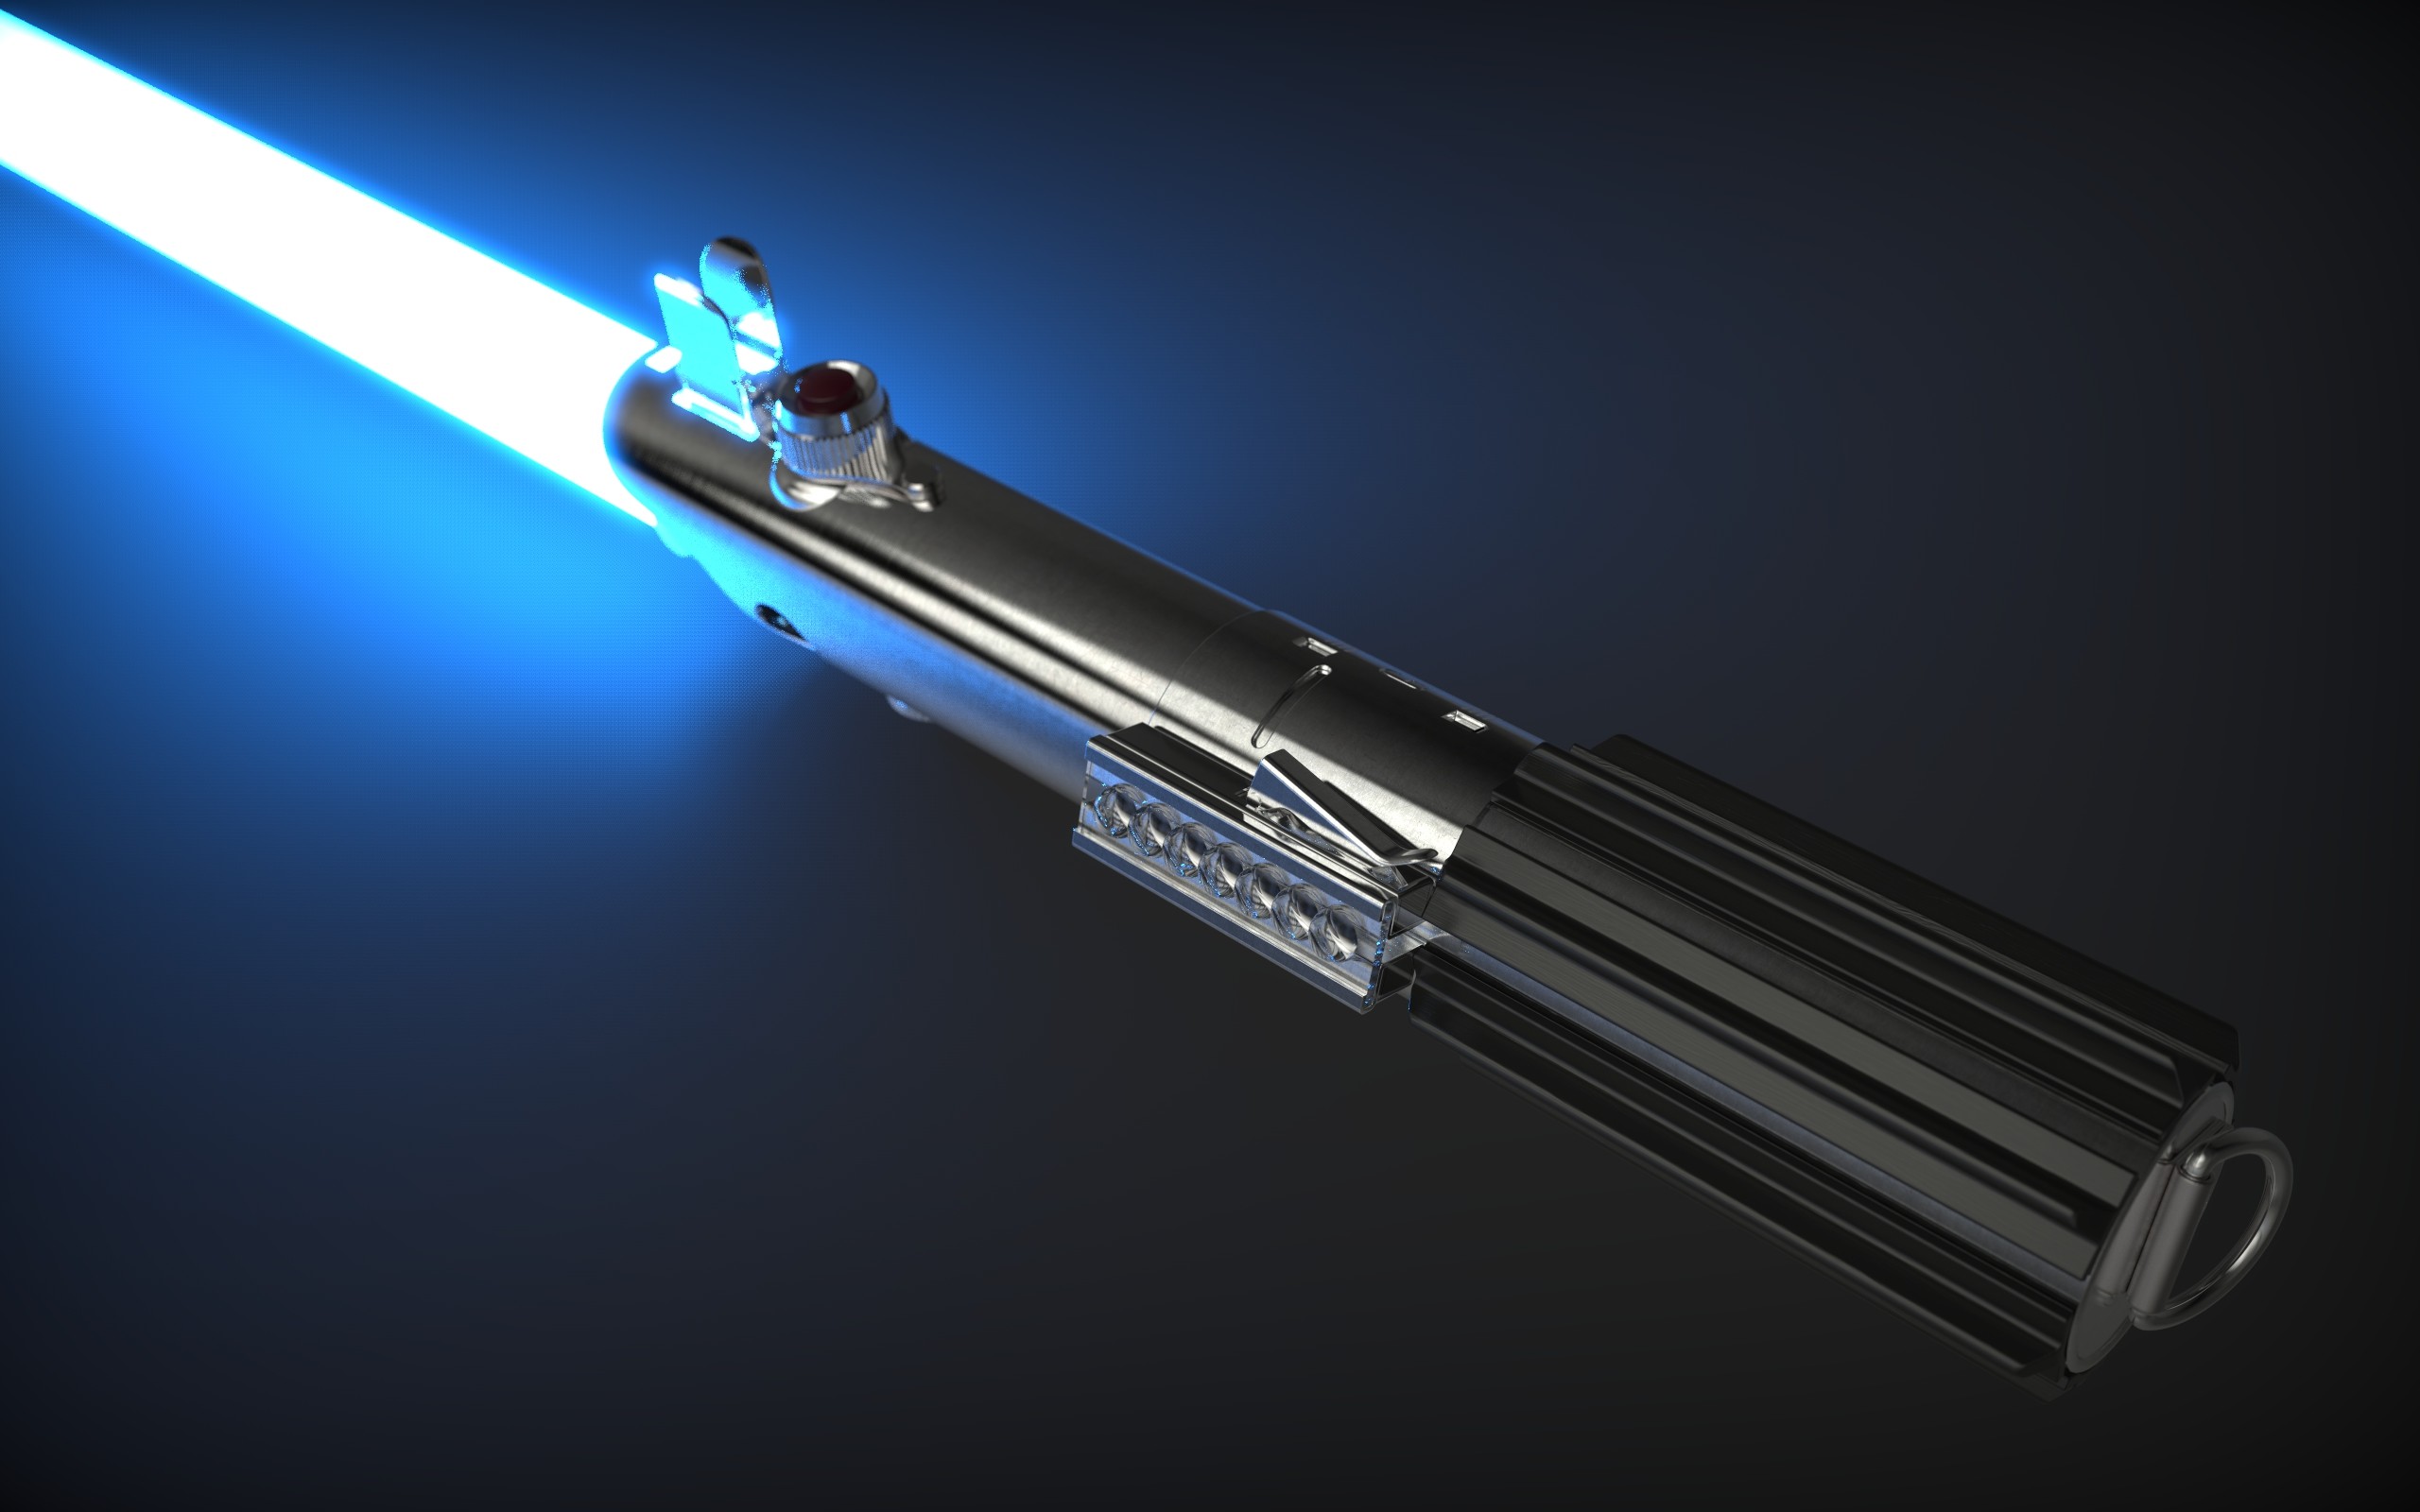 2560x1600 from $289.95 - Graflex 3 Cell Flash Handle Front #StarWars Lightsaber  Skywalker Force Awakens | Lightsaber | Pinterest | Lightsaber and Star wars  lightsaber